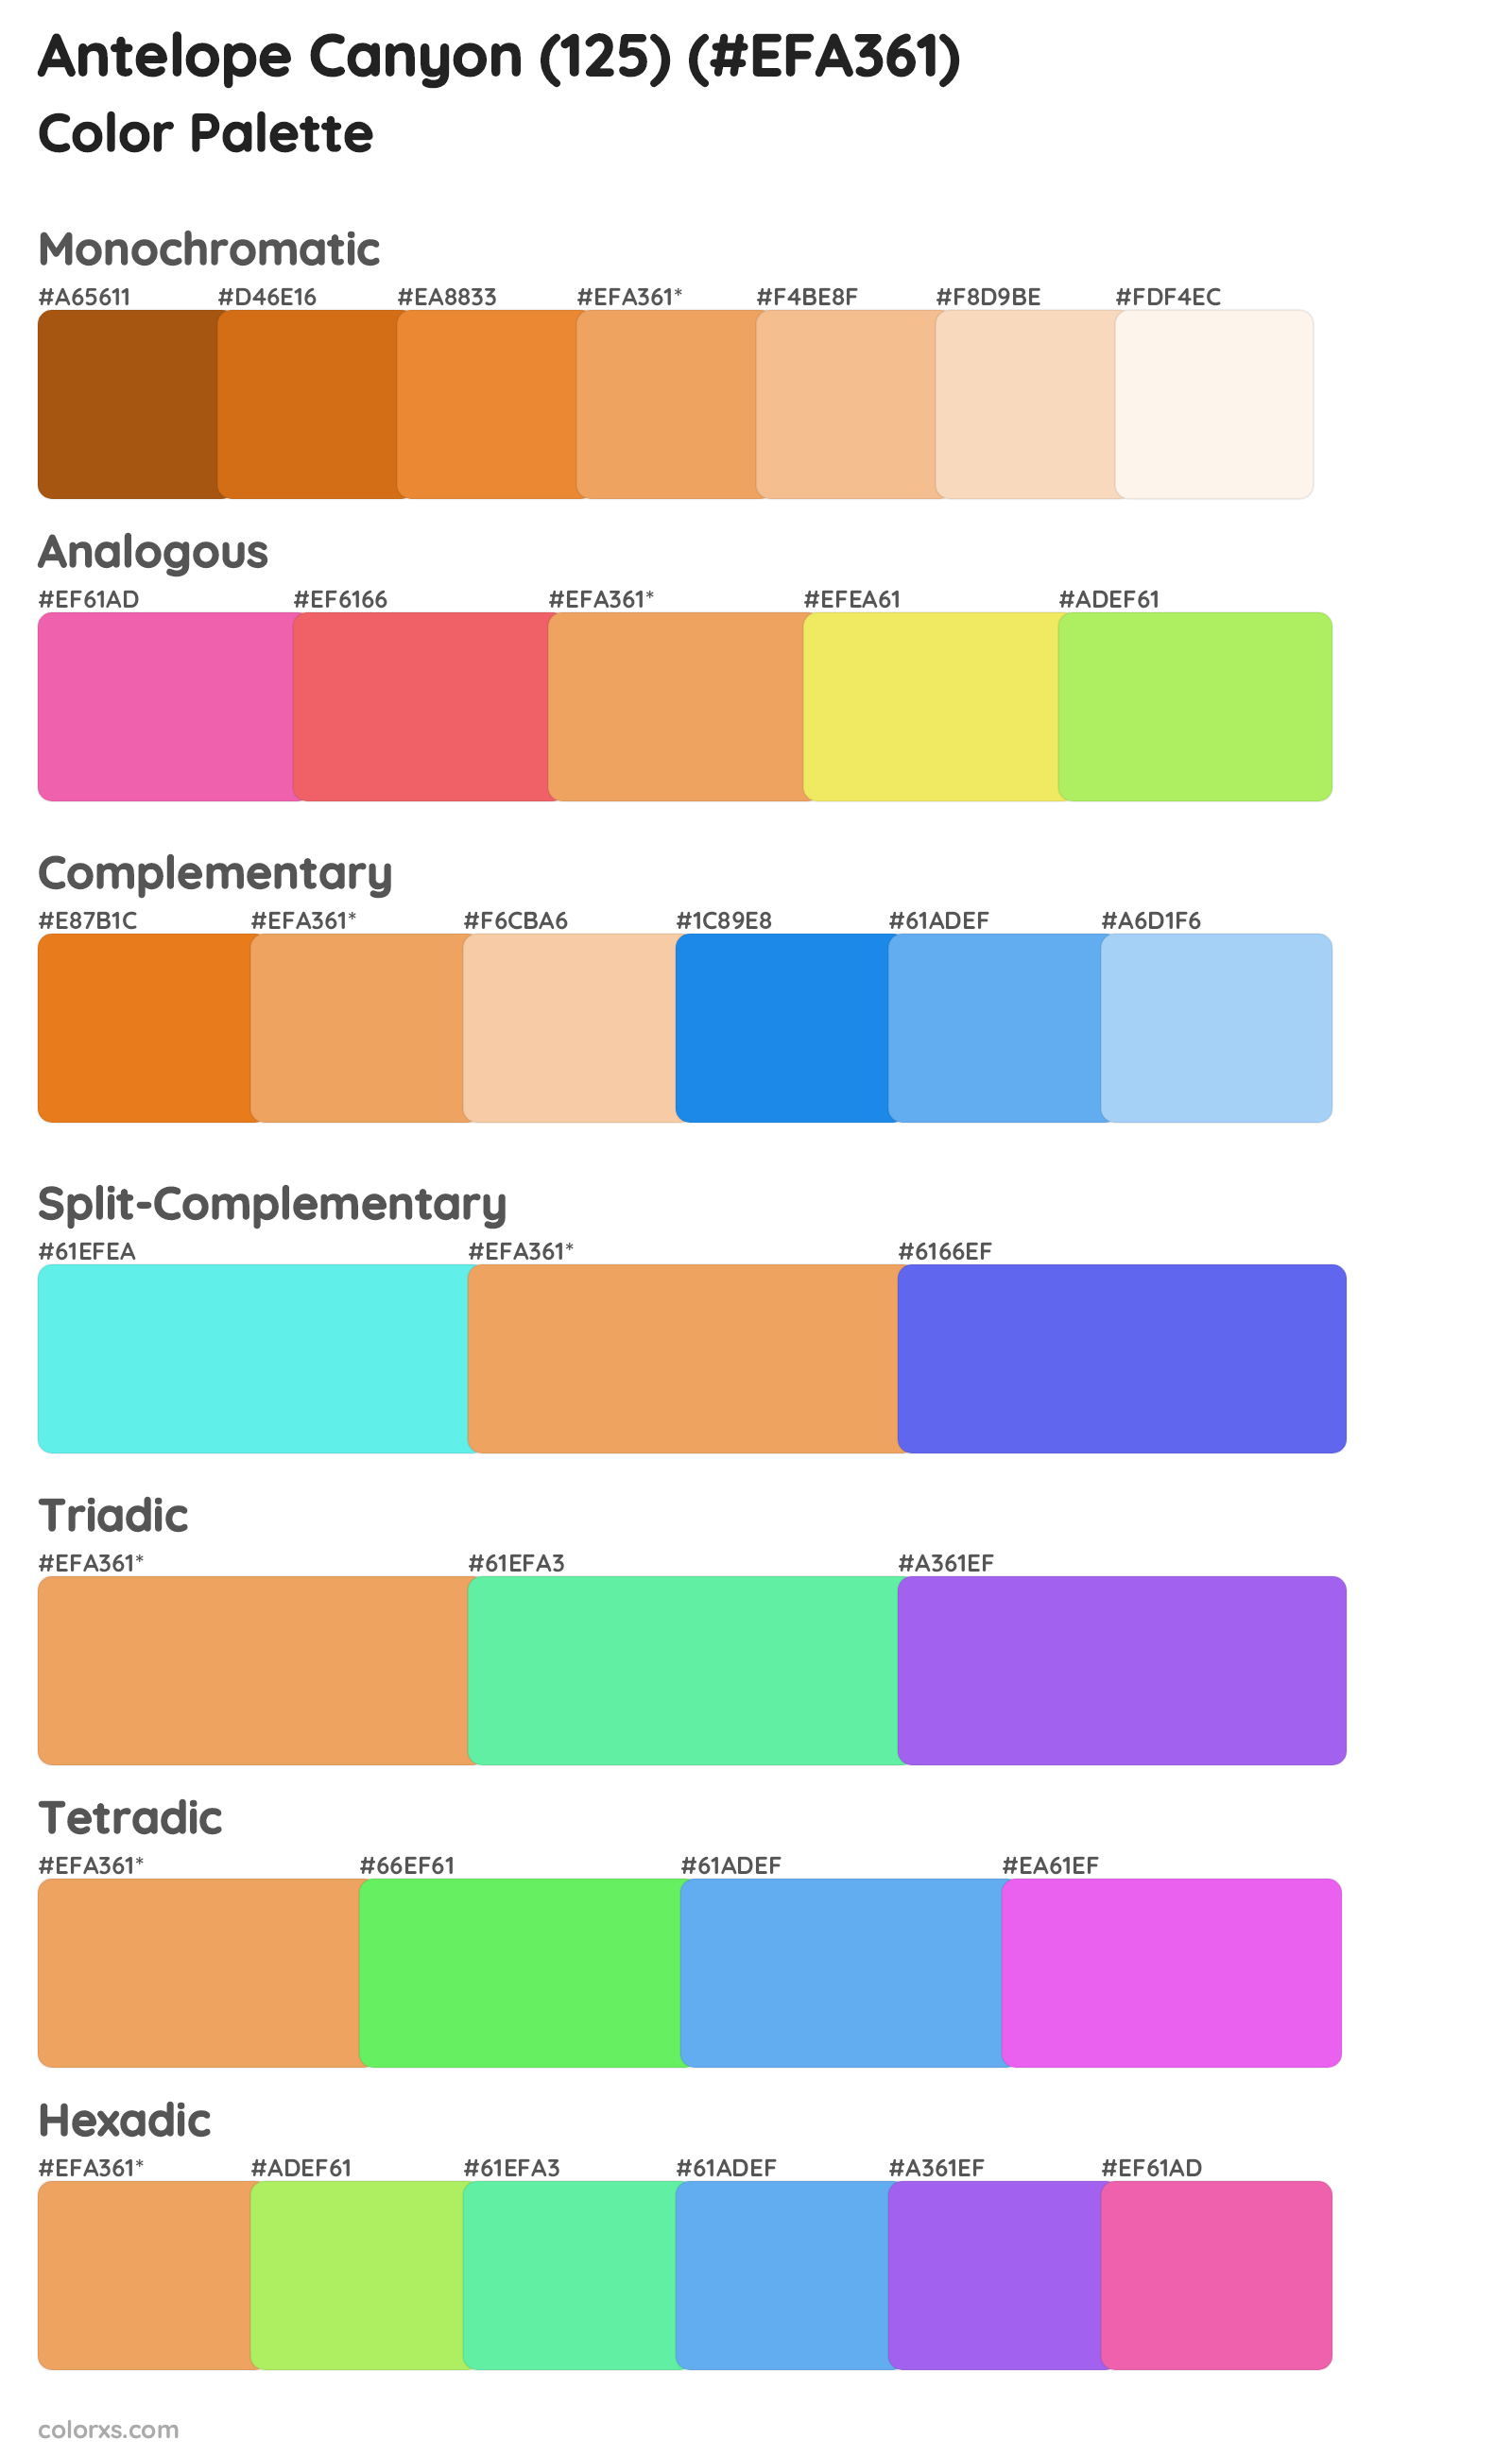 Antelope Canyon (125) Color Scheme Palettes